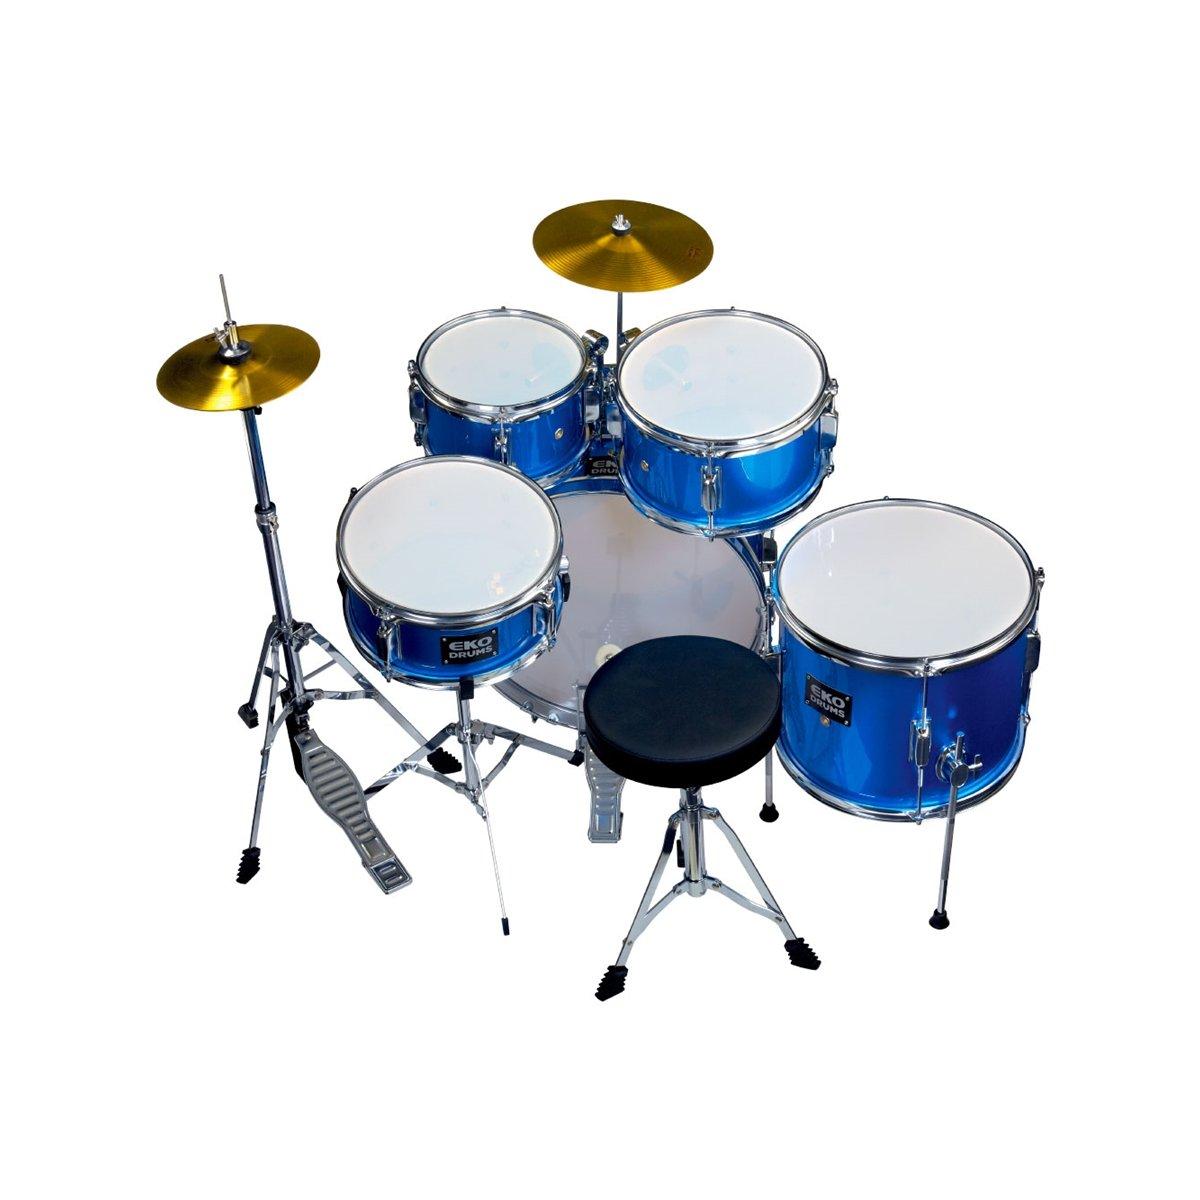 Eko drums ed200 blue metallic batteria acustica per bambini ( 5 pezzi)